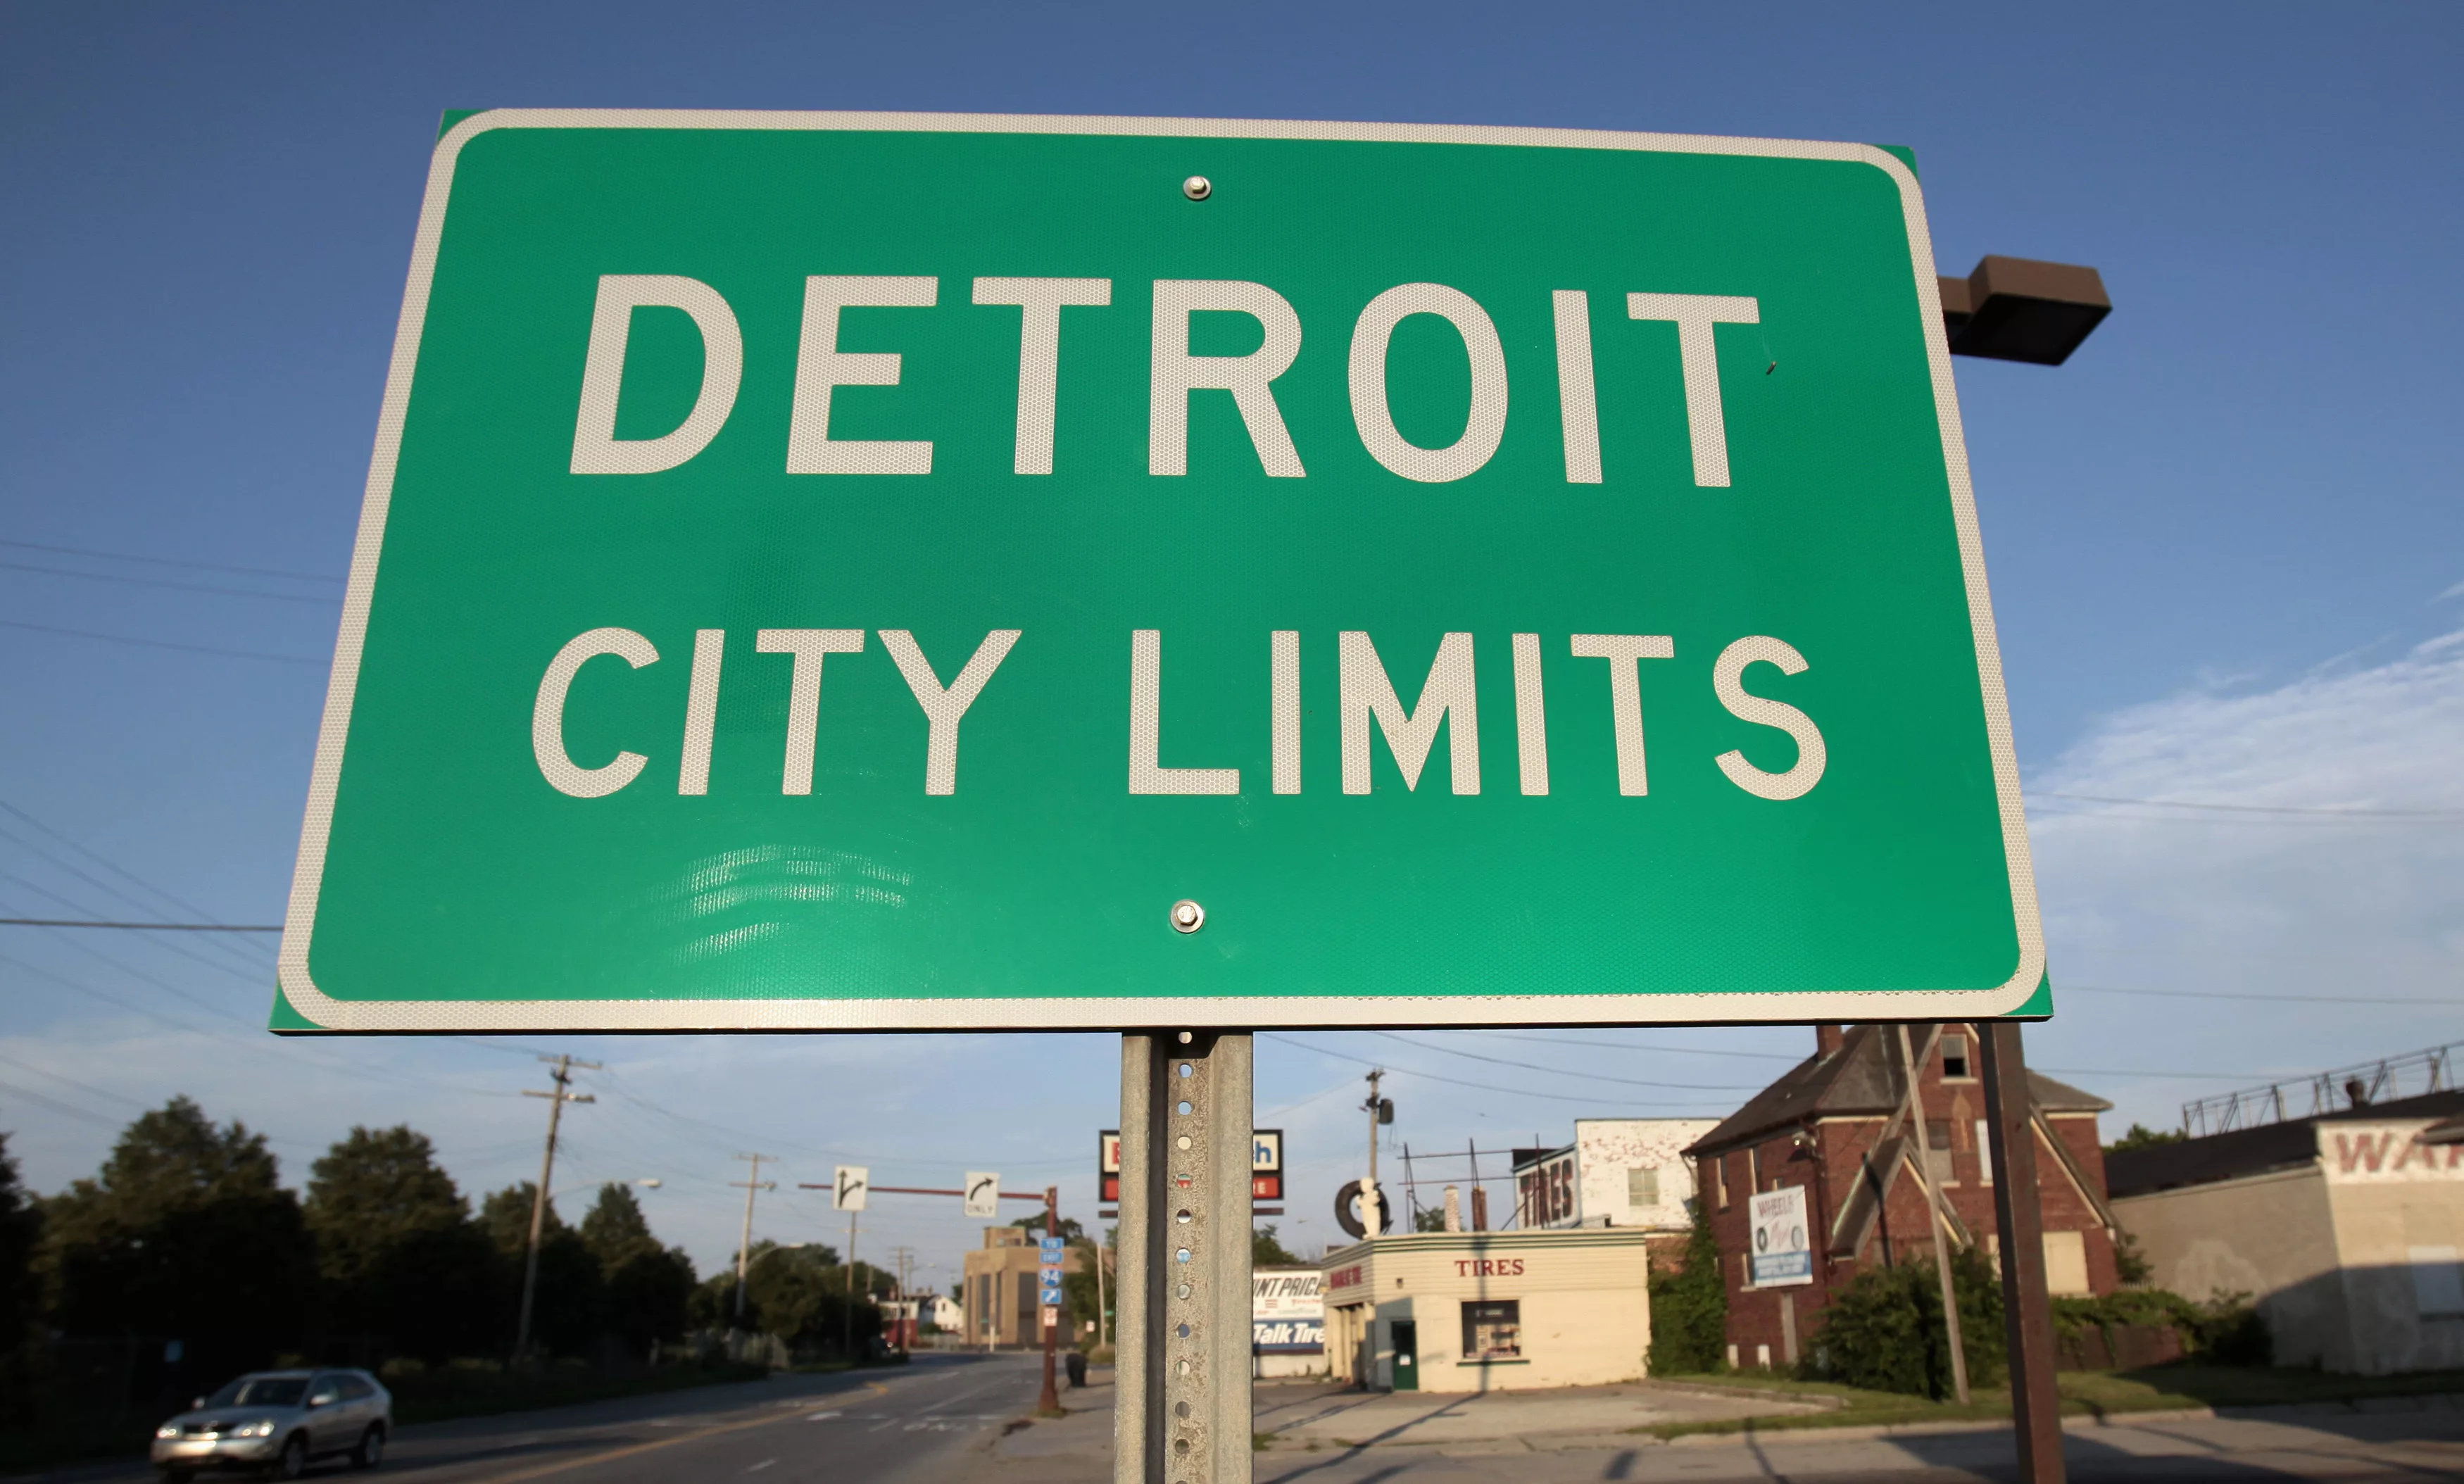 detroit-city-limits-border-sign-is-seen-as-traffic-enters-a-westside-neighborhood-in-detroit